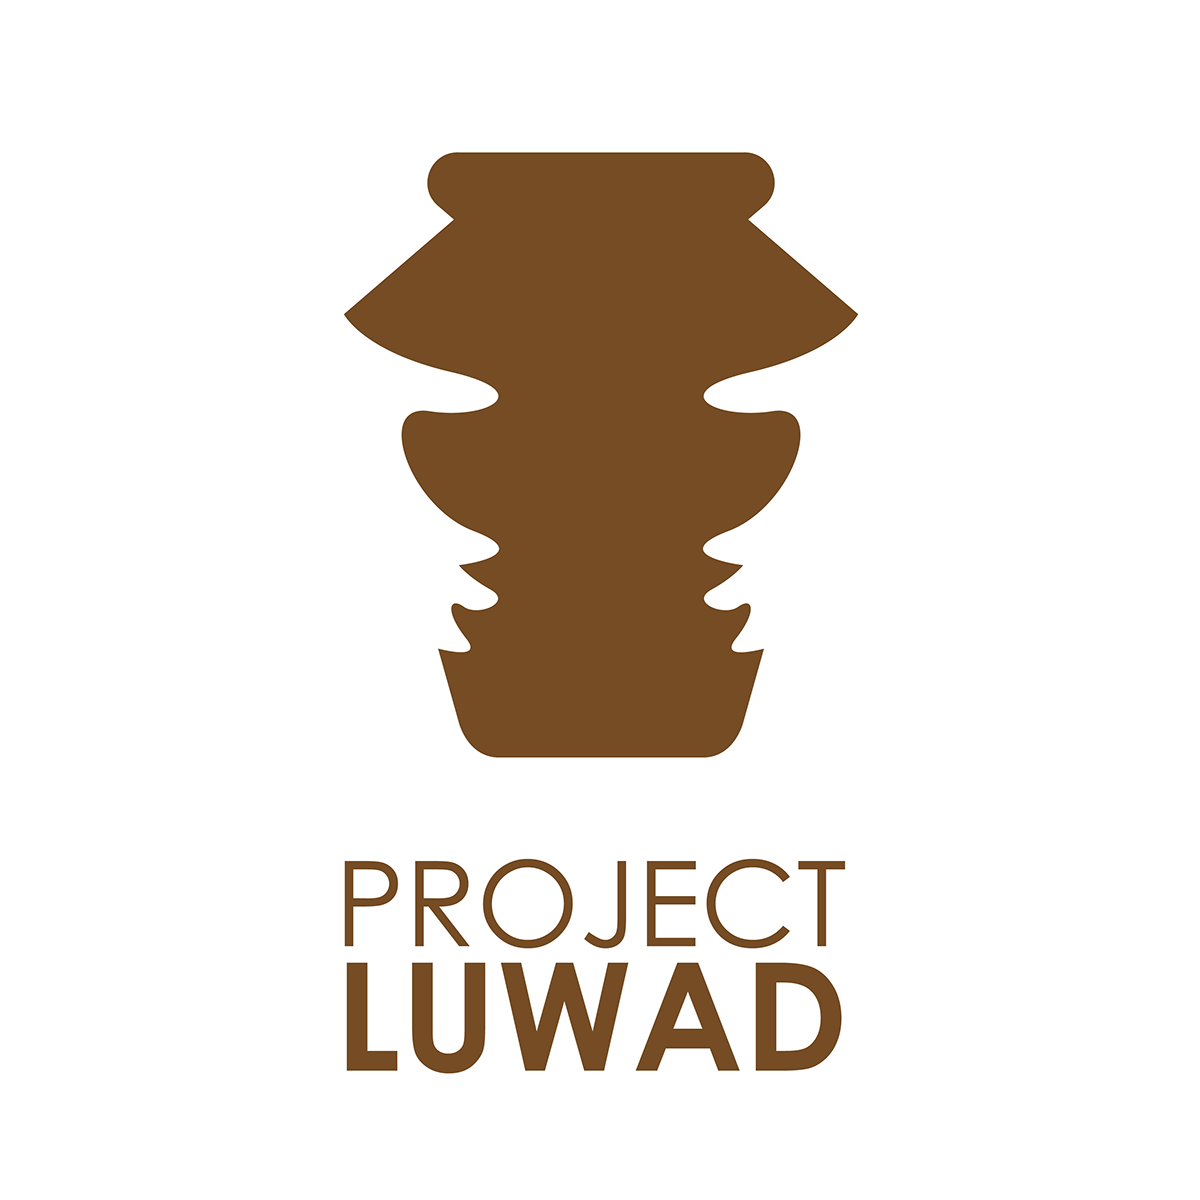 Project luwad project luwad PSSD logo